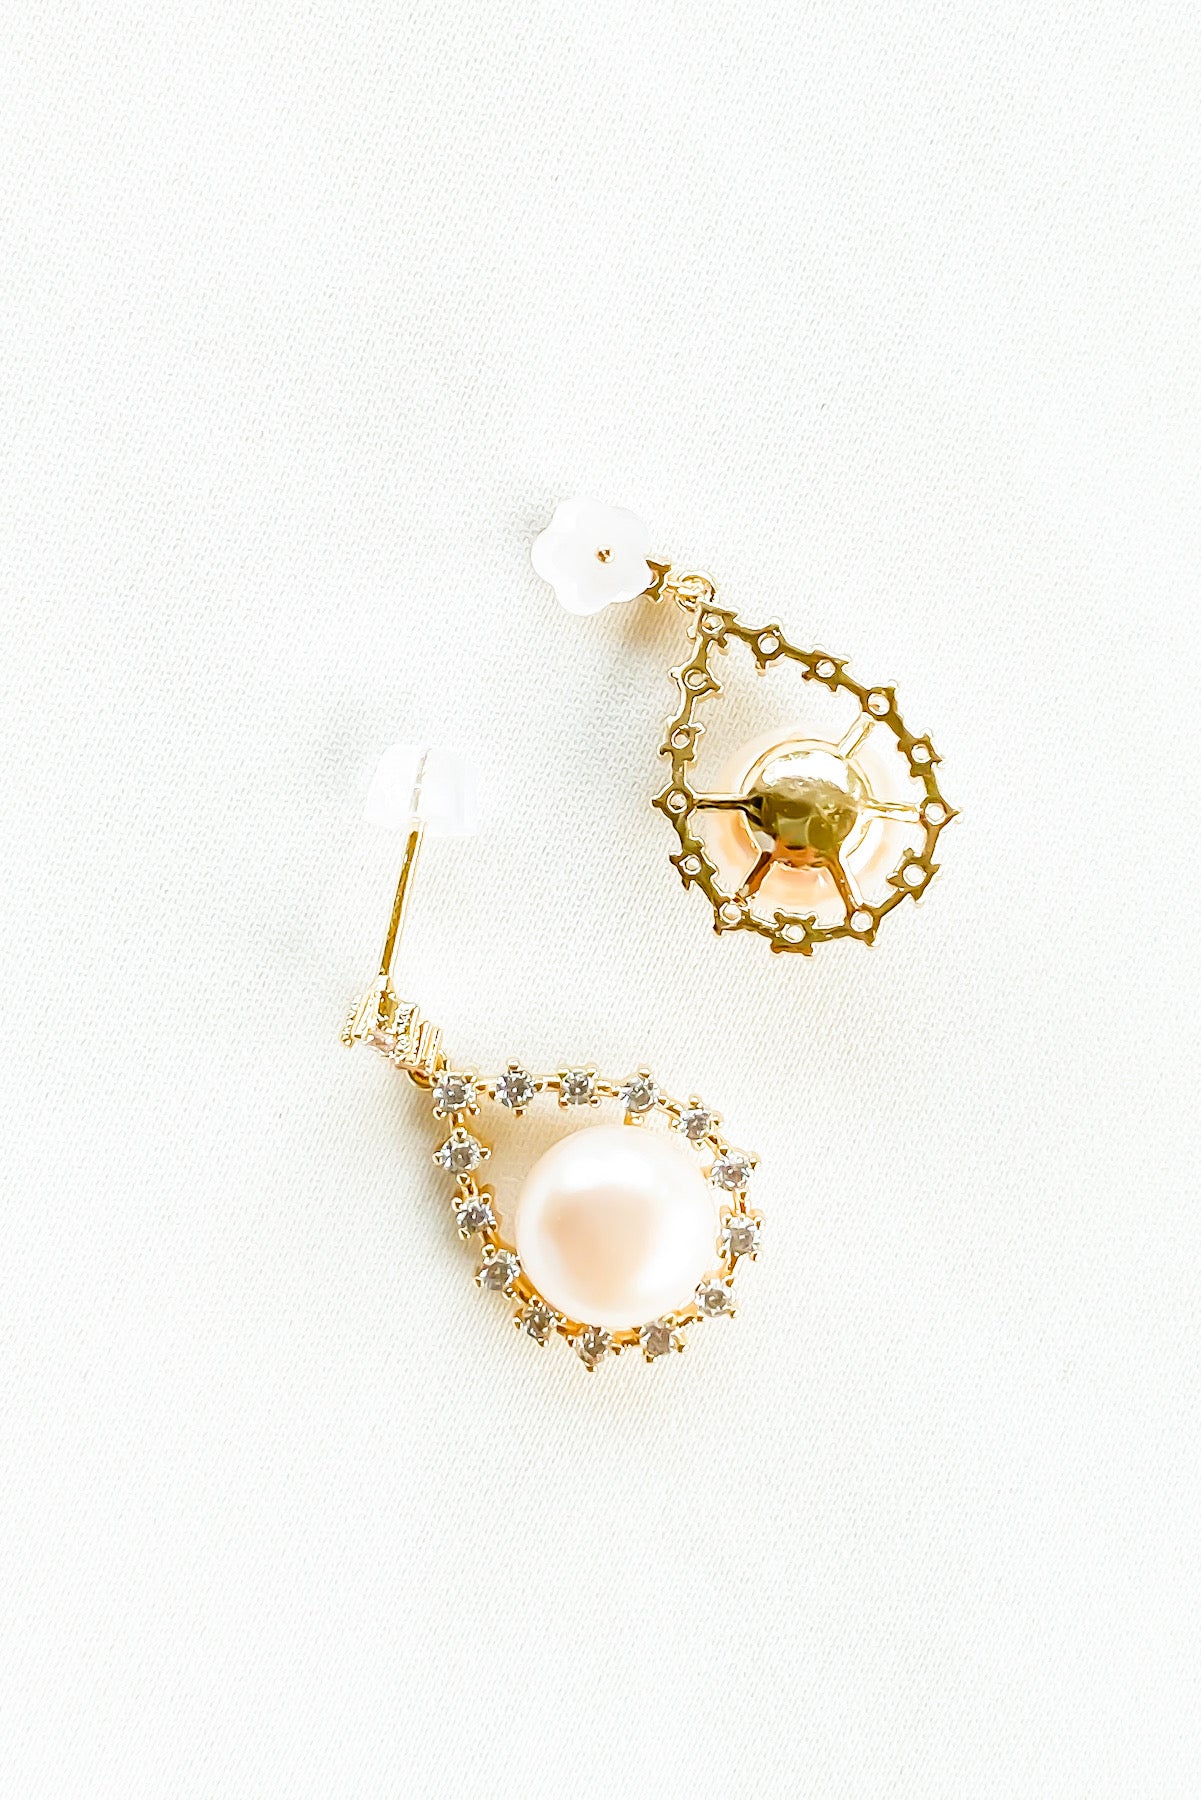 SKYE San Francisco Shop SF Chic Modern Elegant Classy Women Jewelry French Parisian Minimalist Amie 18K Gold Freshwater Pearl Crystal Earrings